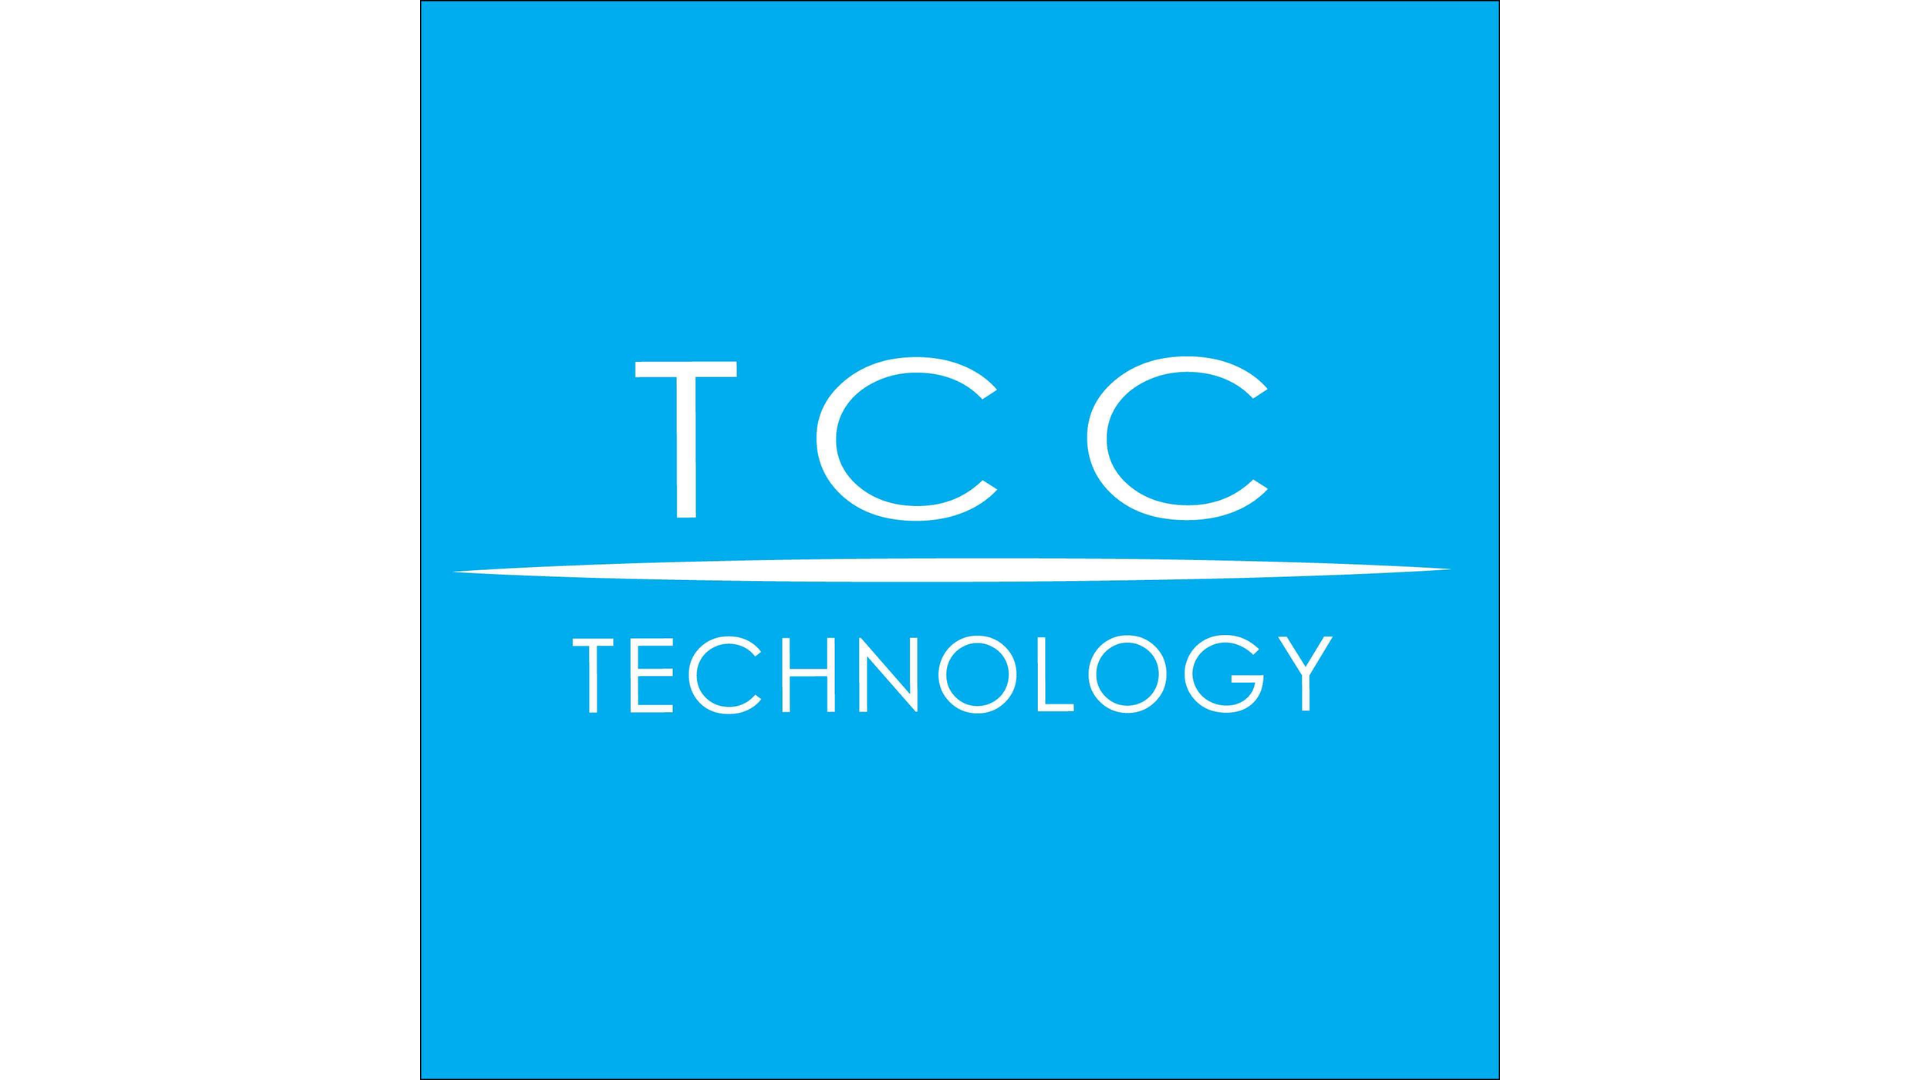 TCC TECHNOLOGY